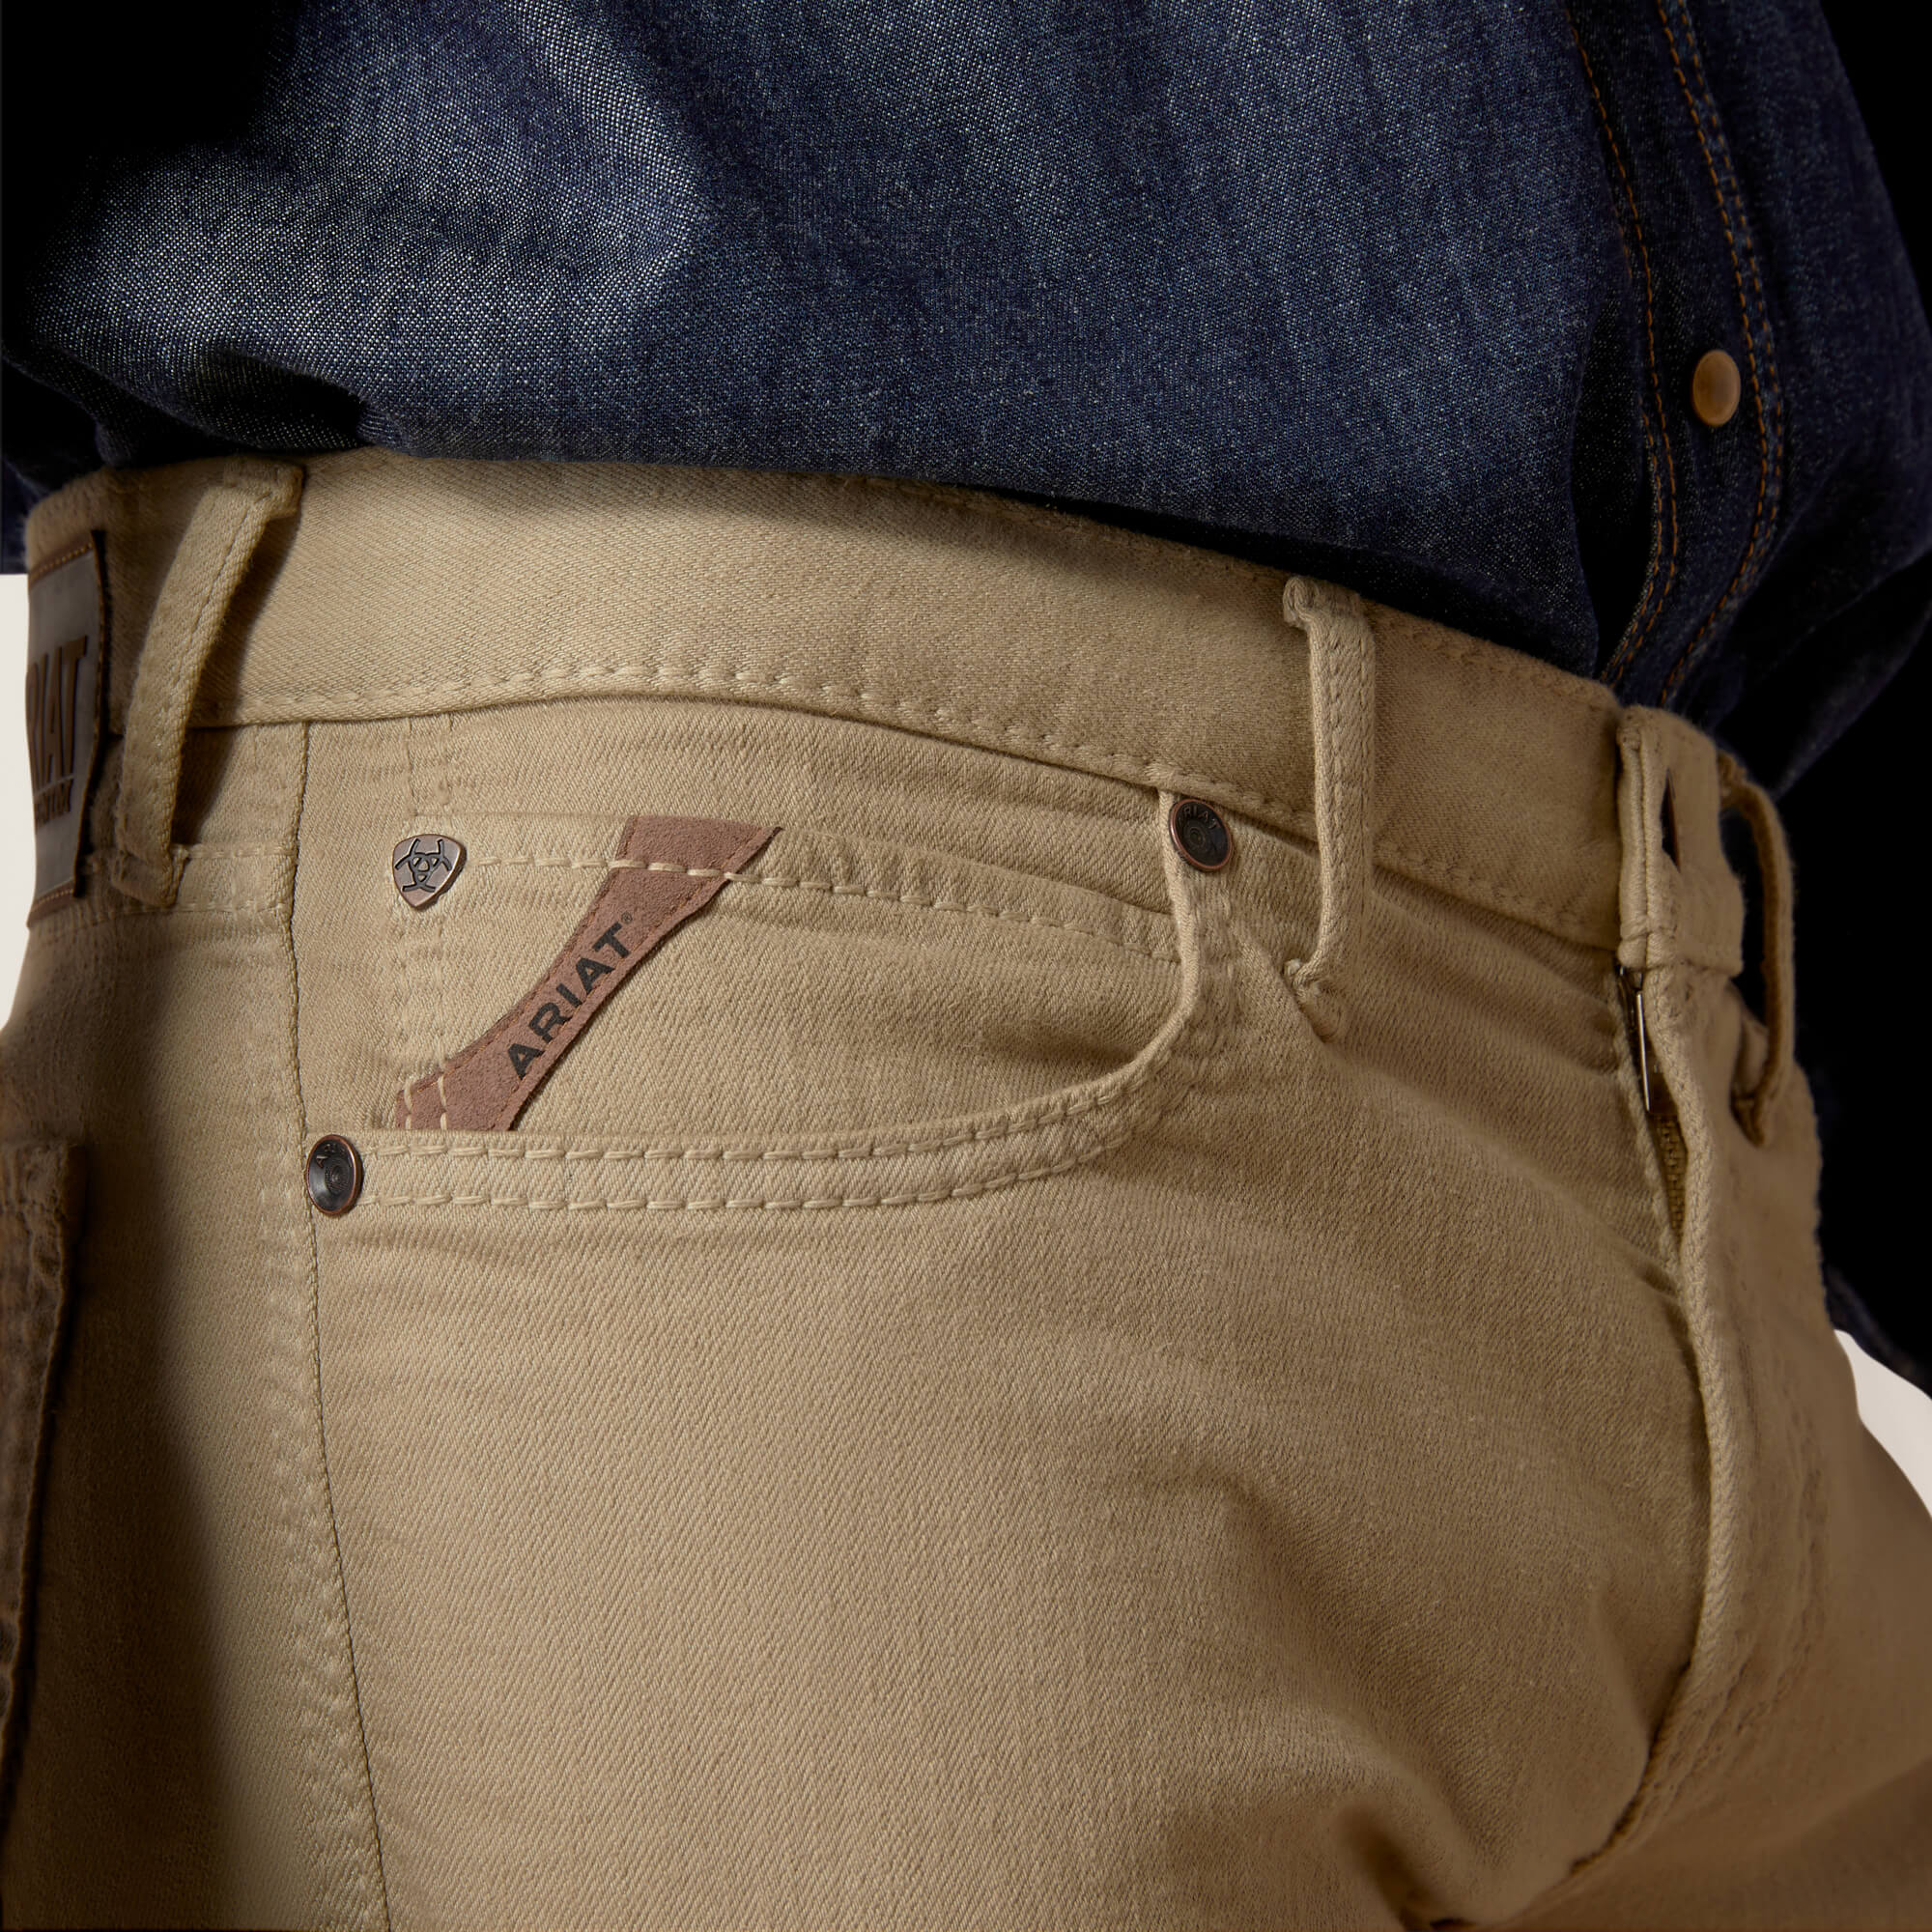 Jeans MNS M7 STR GRIZZLY STRAIGHT JEAN OLIVE Khaki - Reitstiefel Kandel - Dein Reitshop